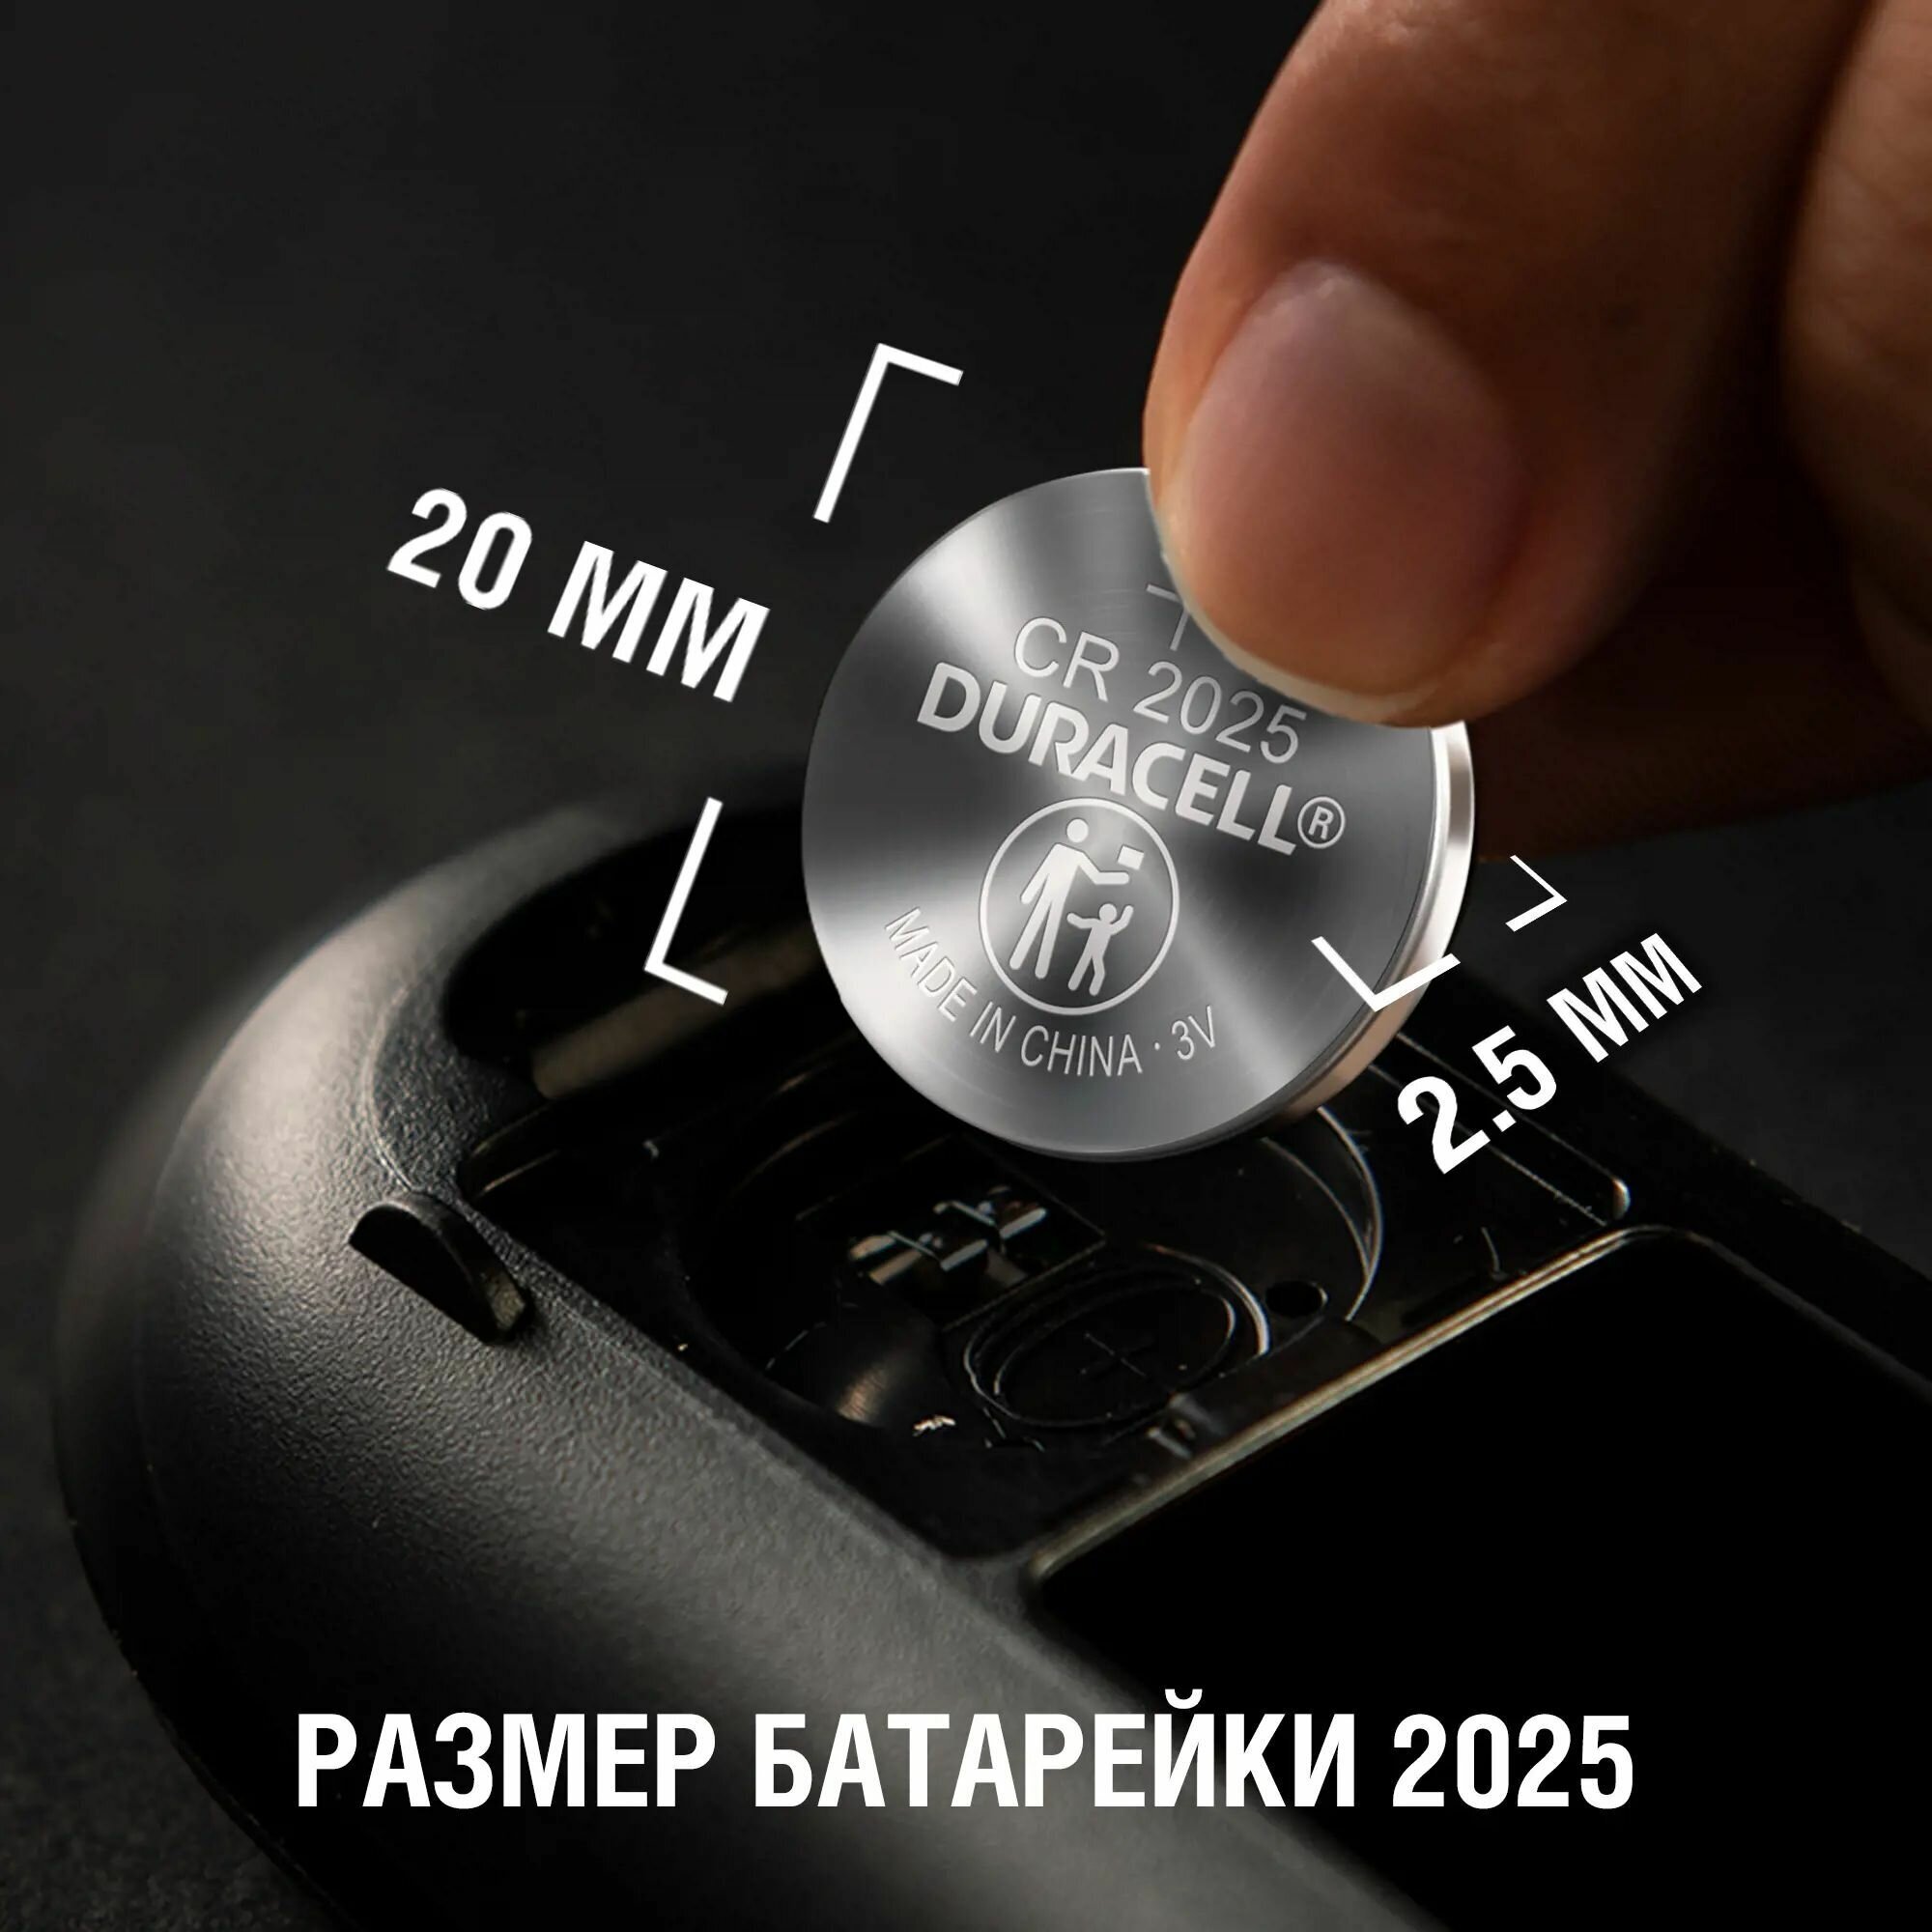 Батарейки Duracell 3V 2025, 2 шт. (81575098) - фото №7